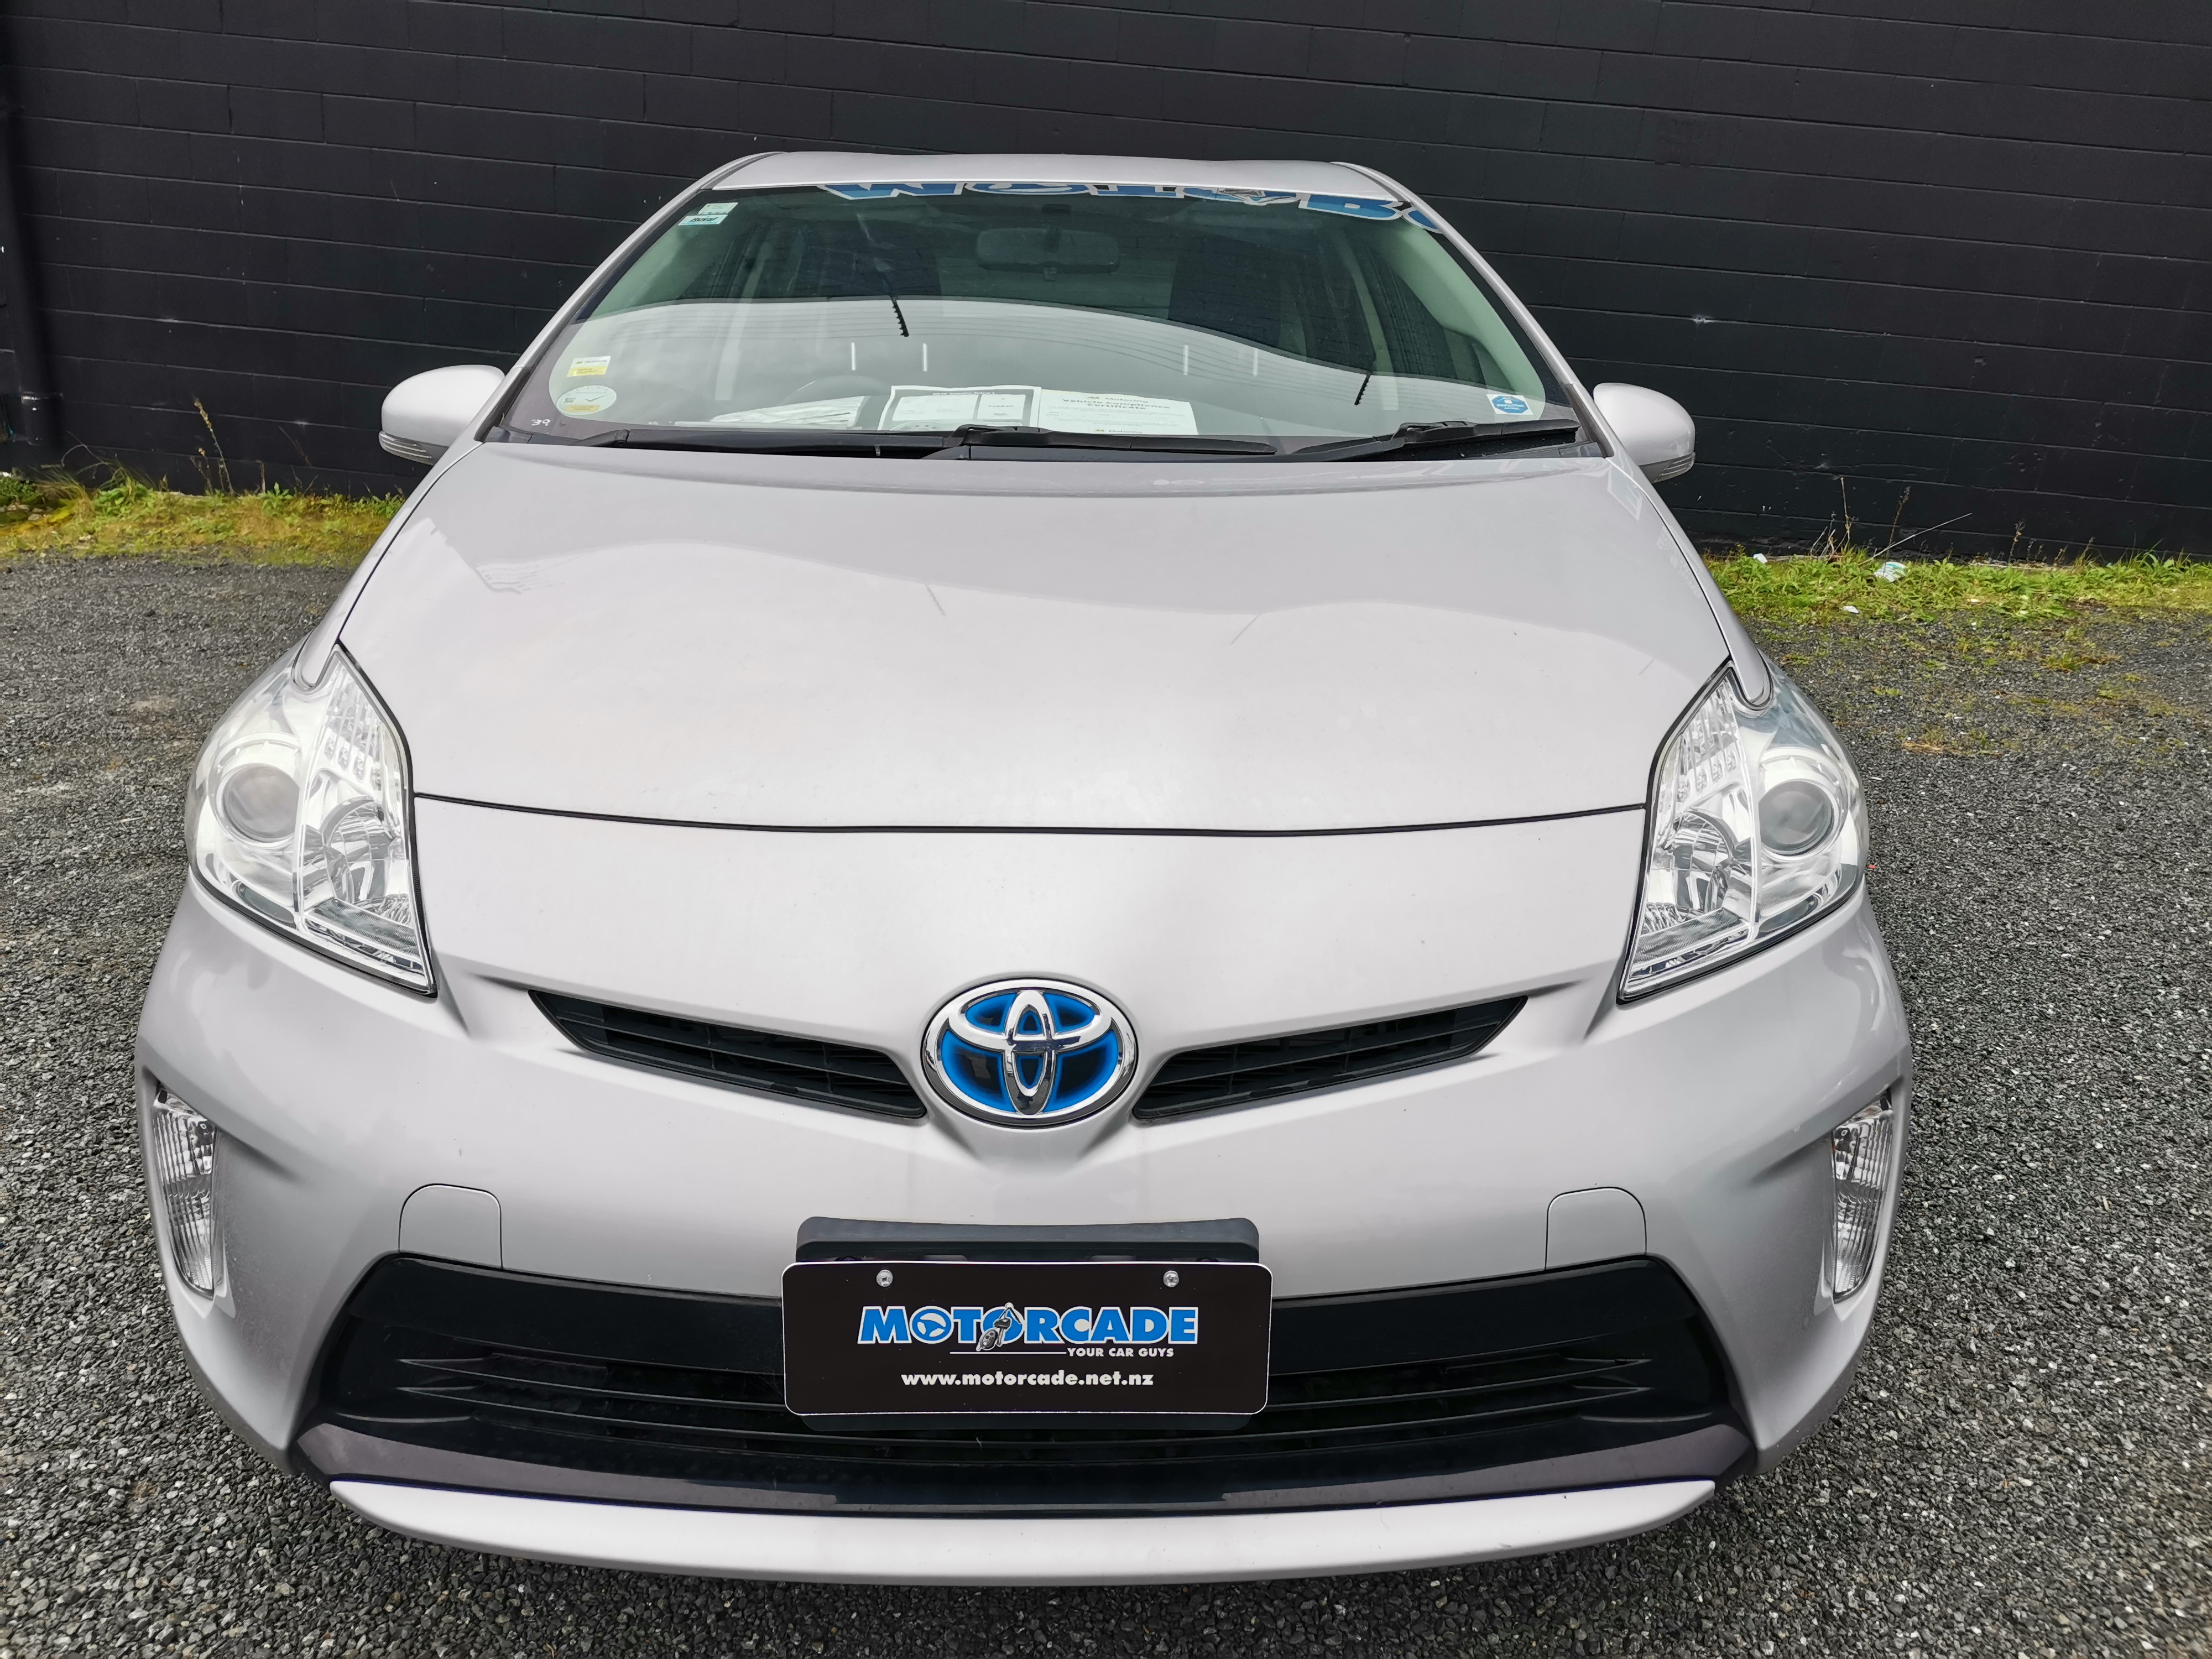 Toyota Prius 2015 Image 3